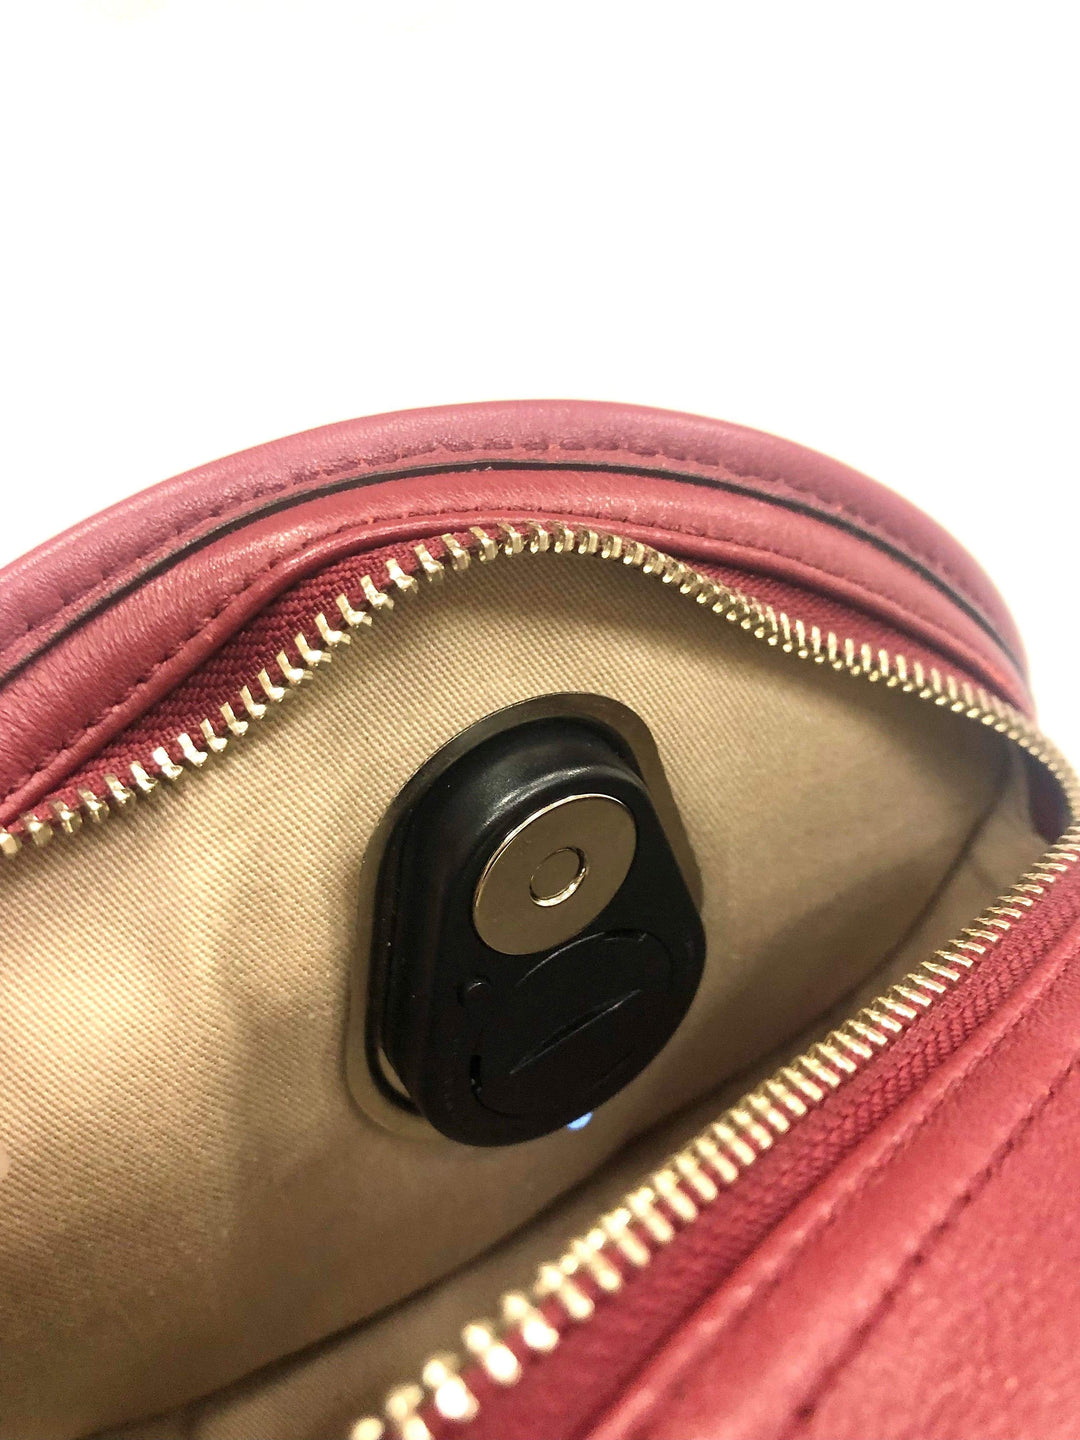 Ohio Travel Bag-Novelty & Gift-2 Black, Magnetic Snap Purse Light,  Plastic, #P-2757-$2.70